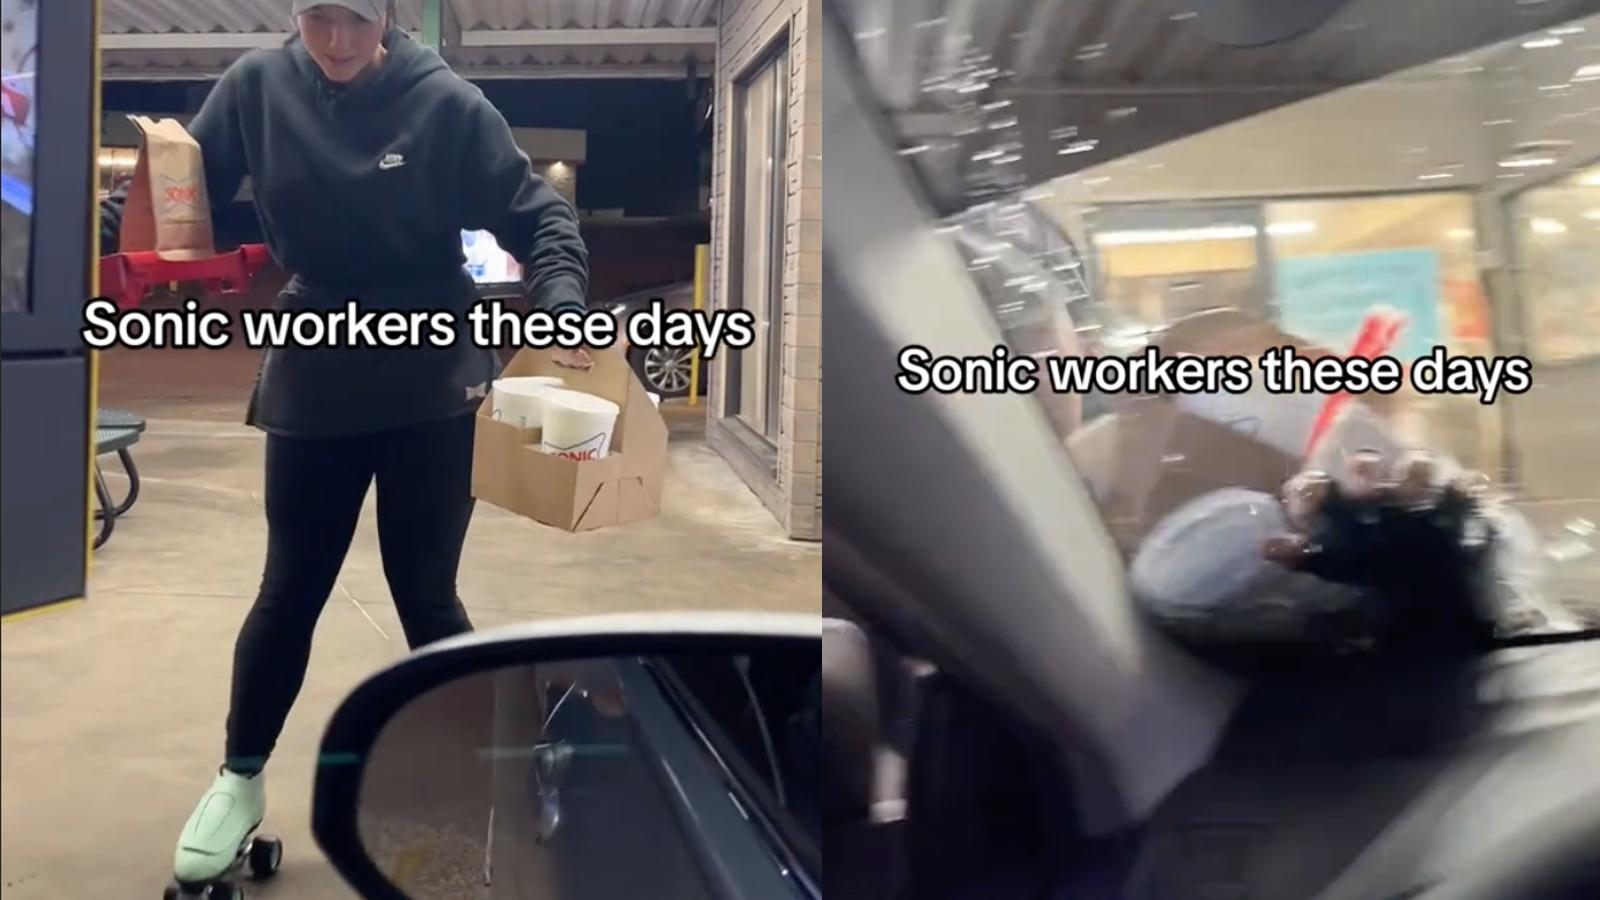 Sonic worker spills order over car